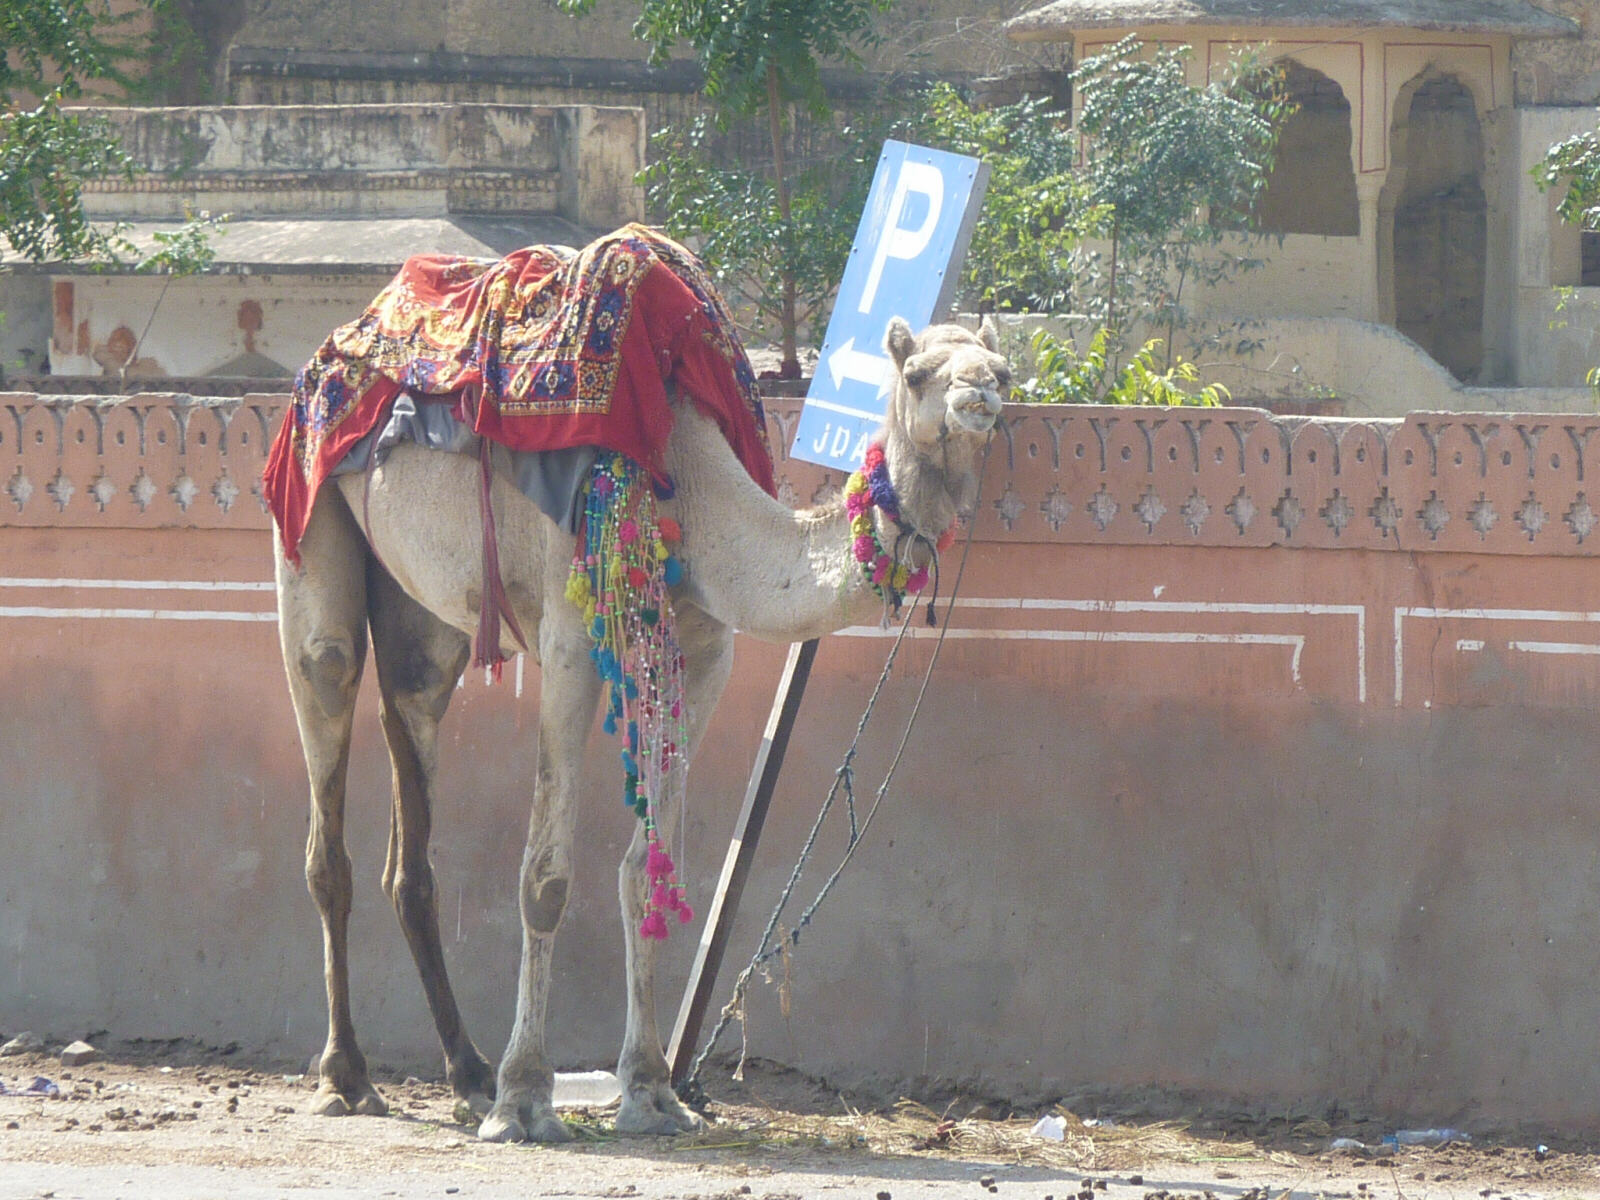 A camel parking rank in Jaipur, Rajasthan